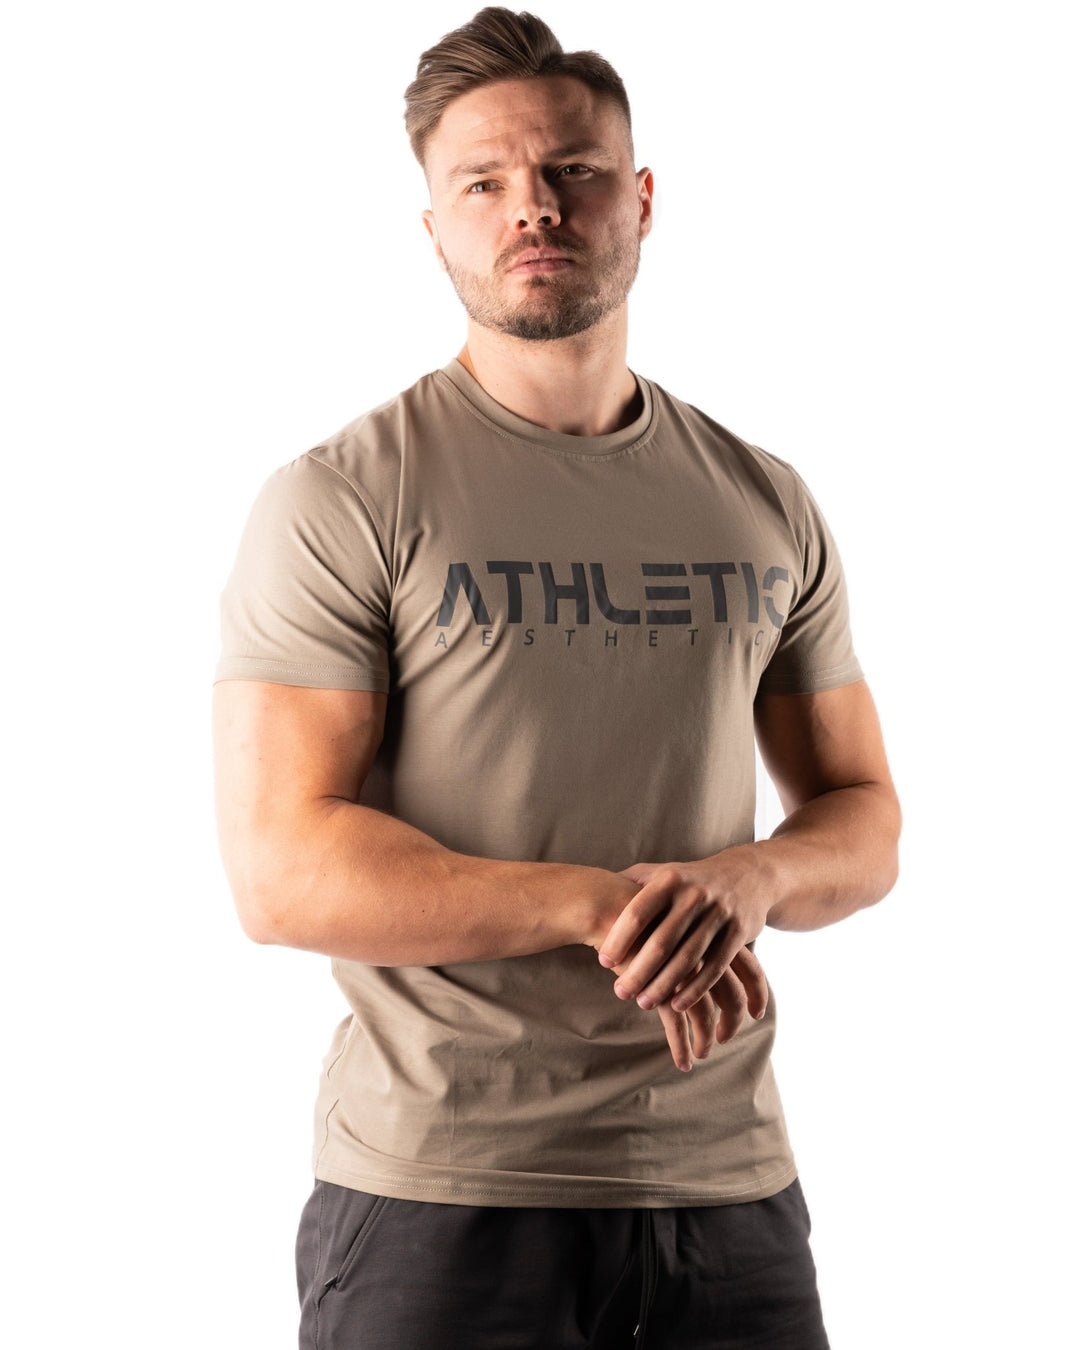 Classic Fit (Military) - Athletic Aesthetics